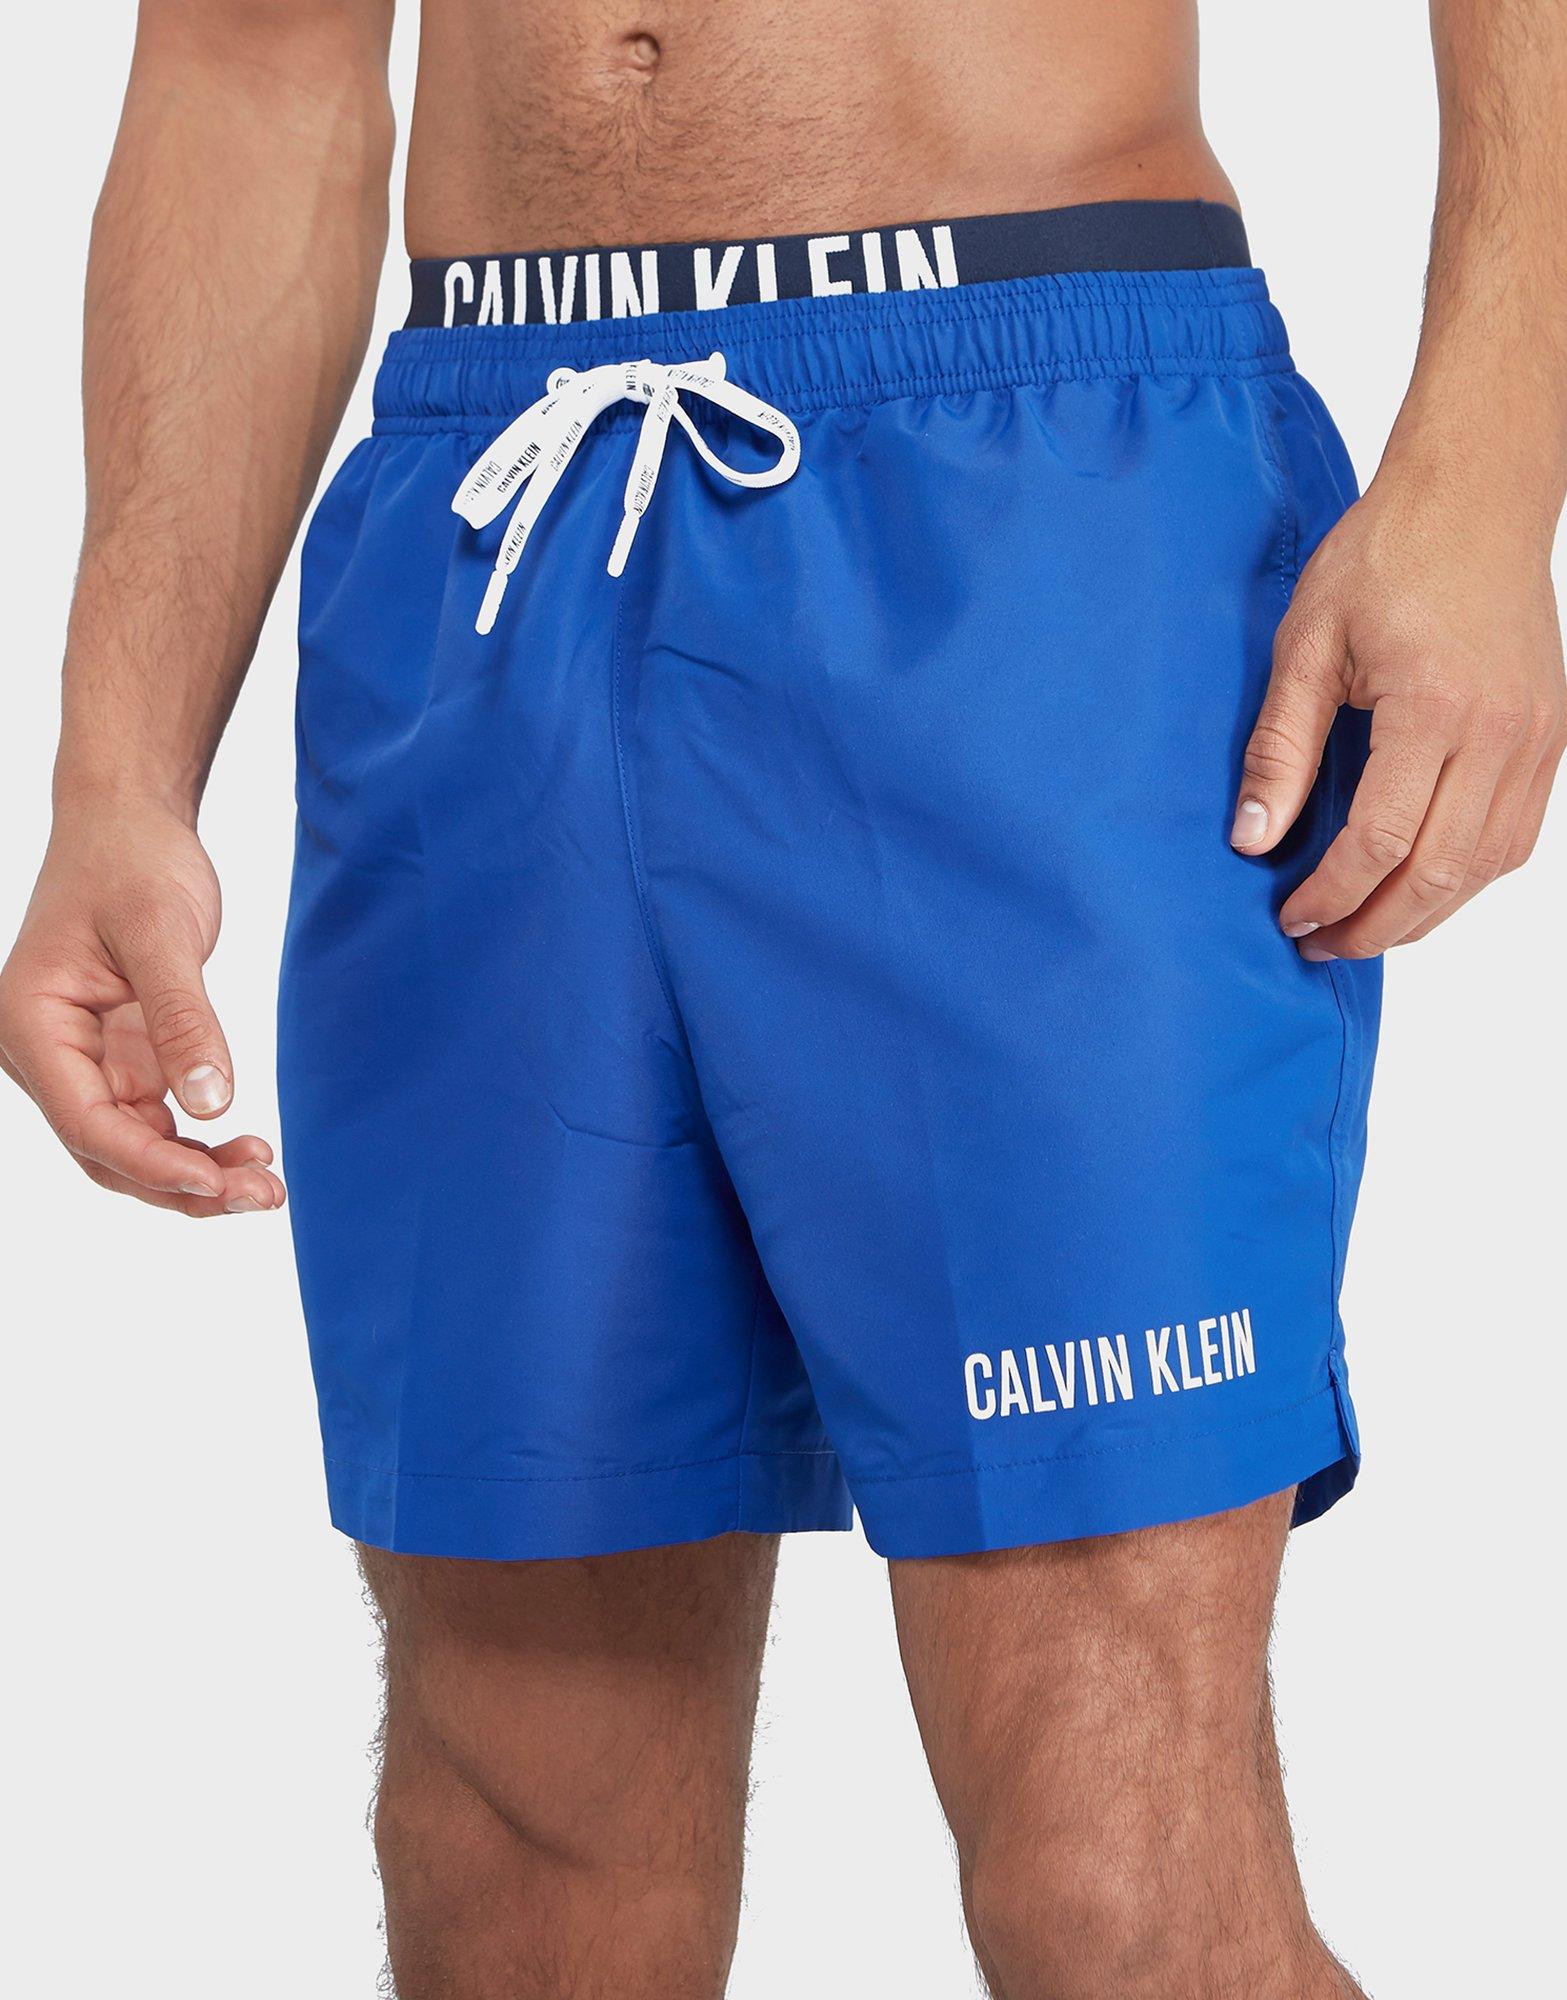 calvin klein blue shorts